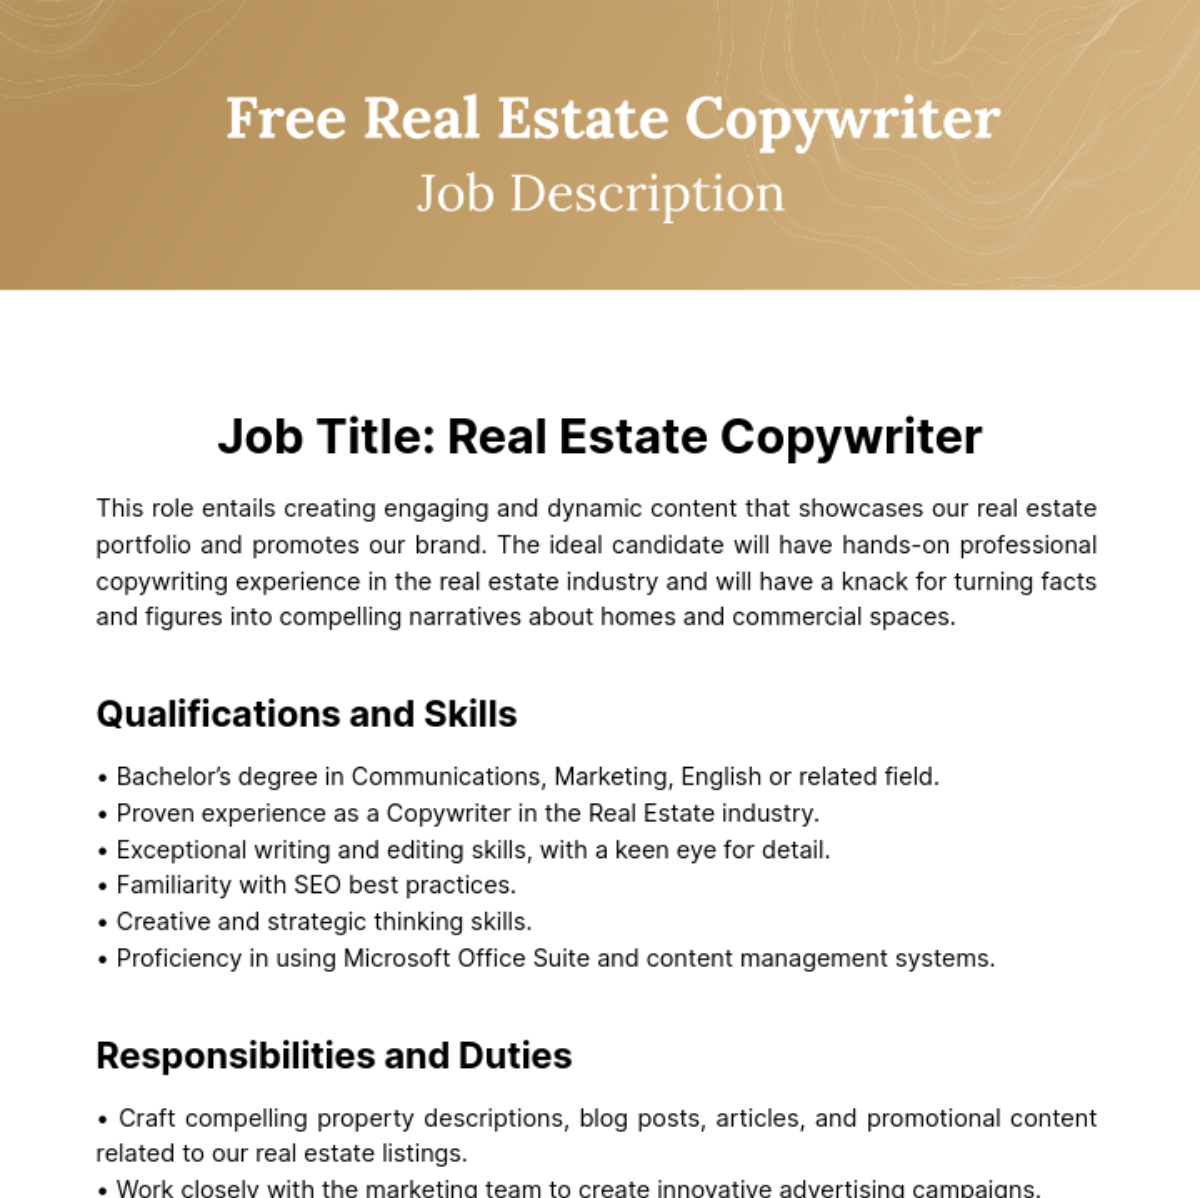 Real Estate Copywriter Job Description Template